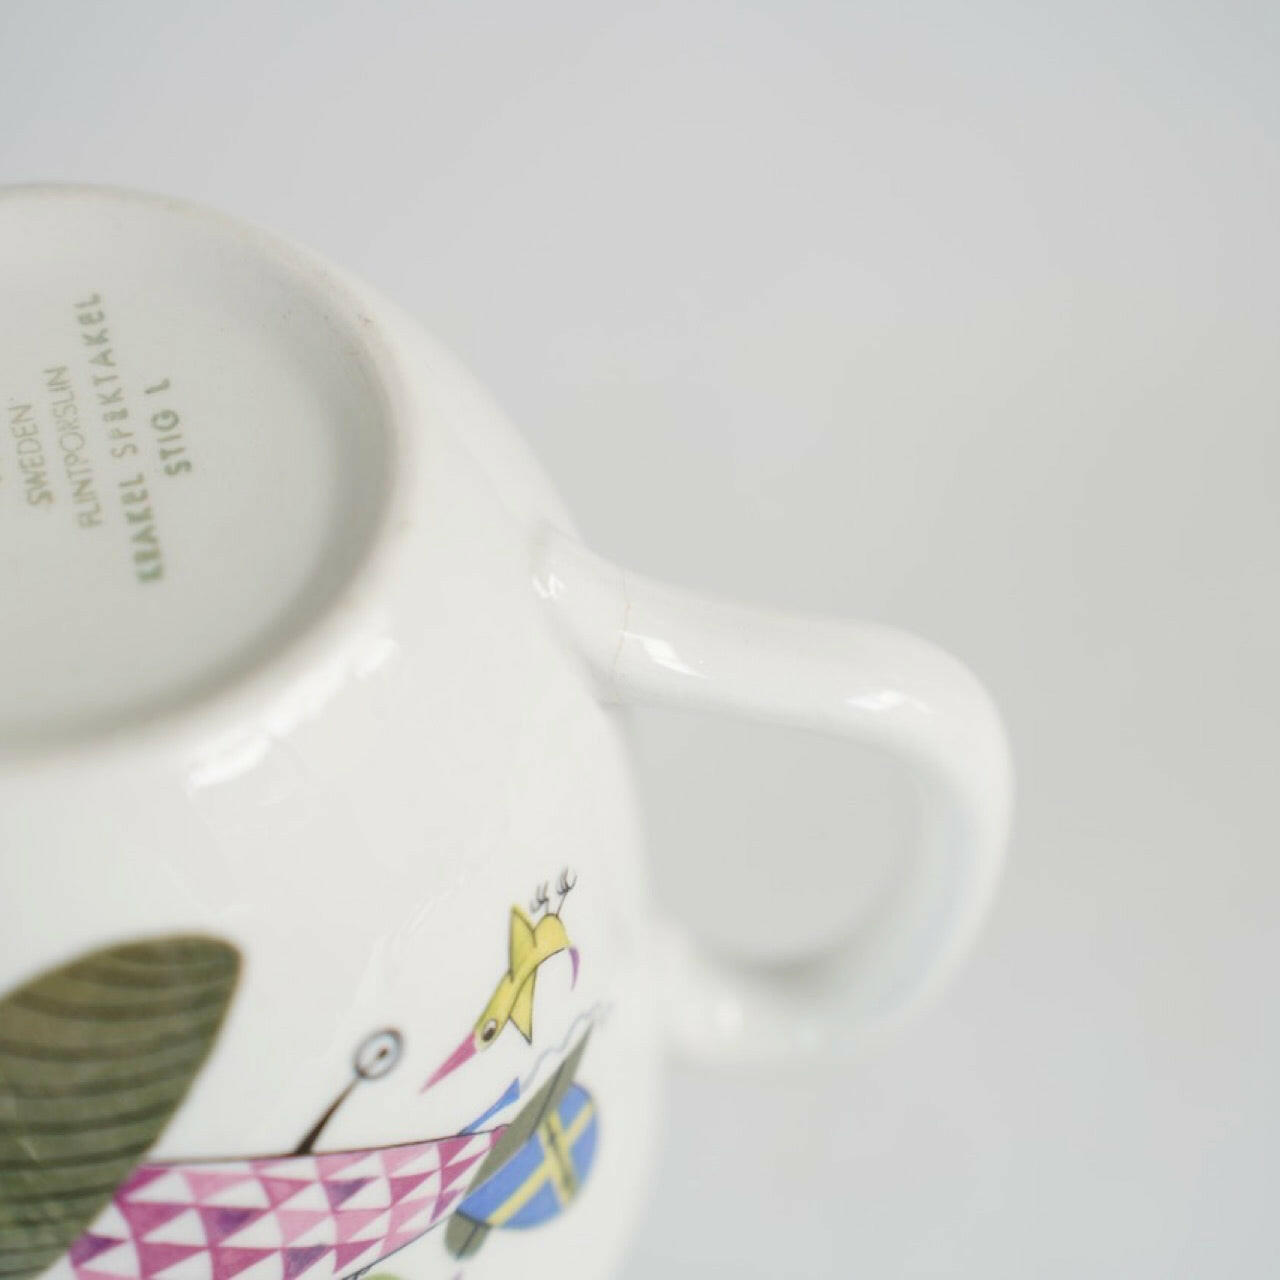 Gustavsberg Krakel Spektakel 茶杯和碗套装